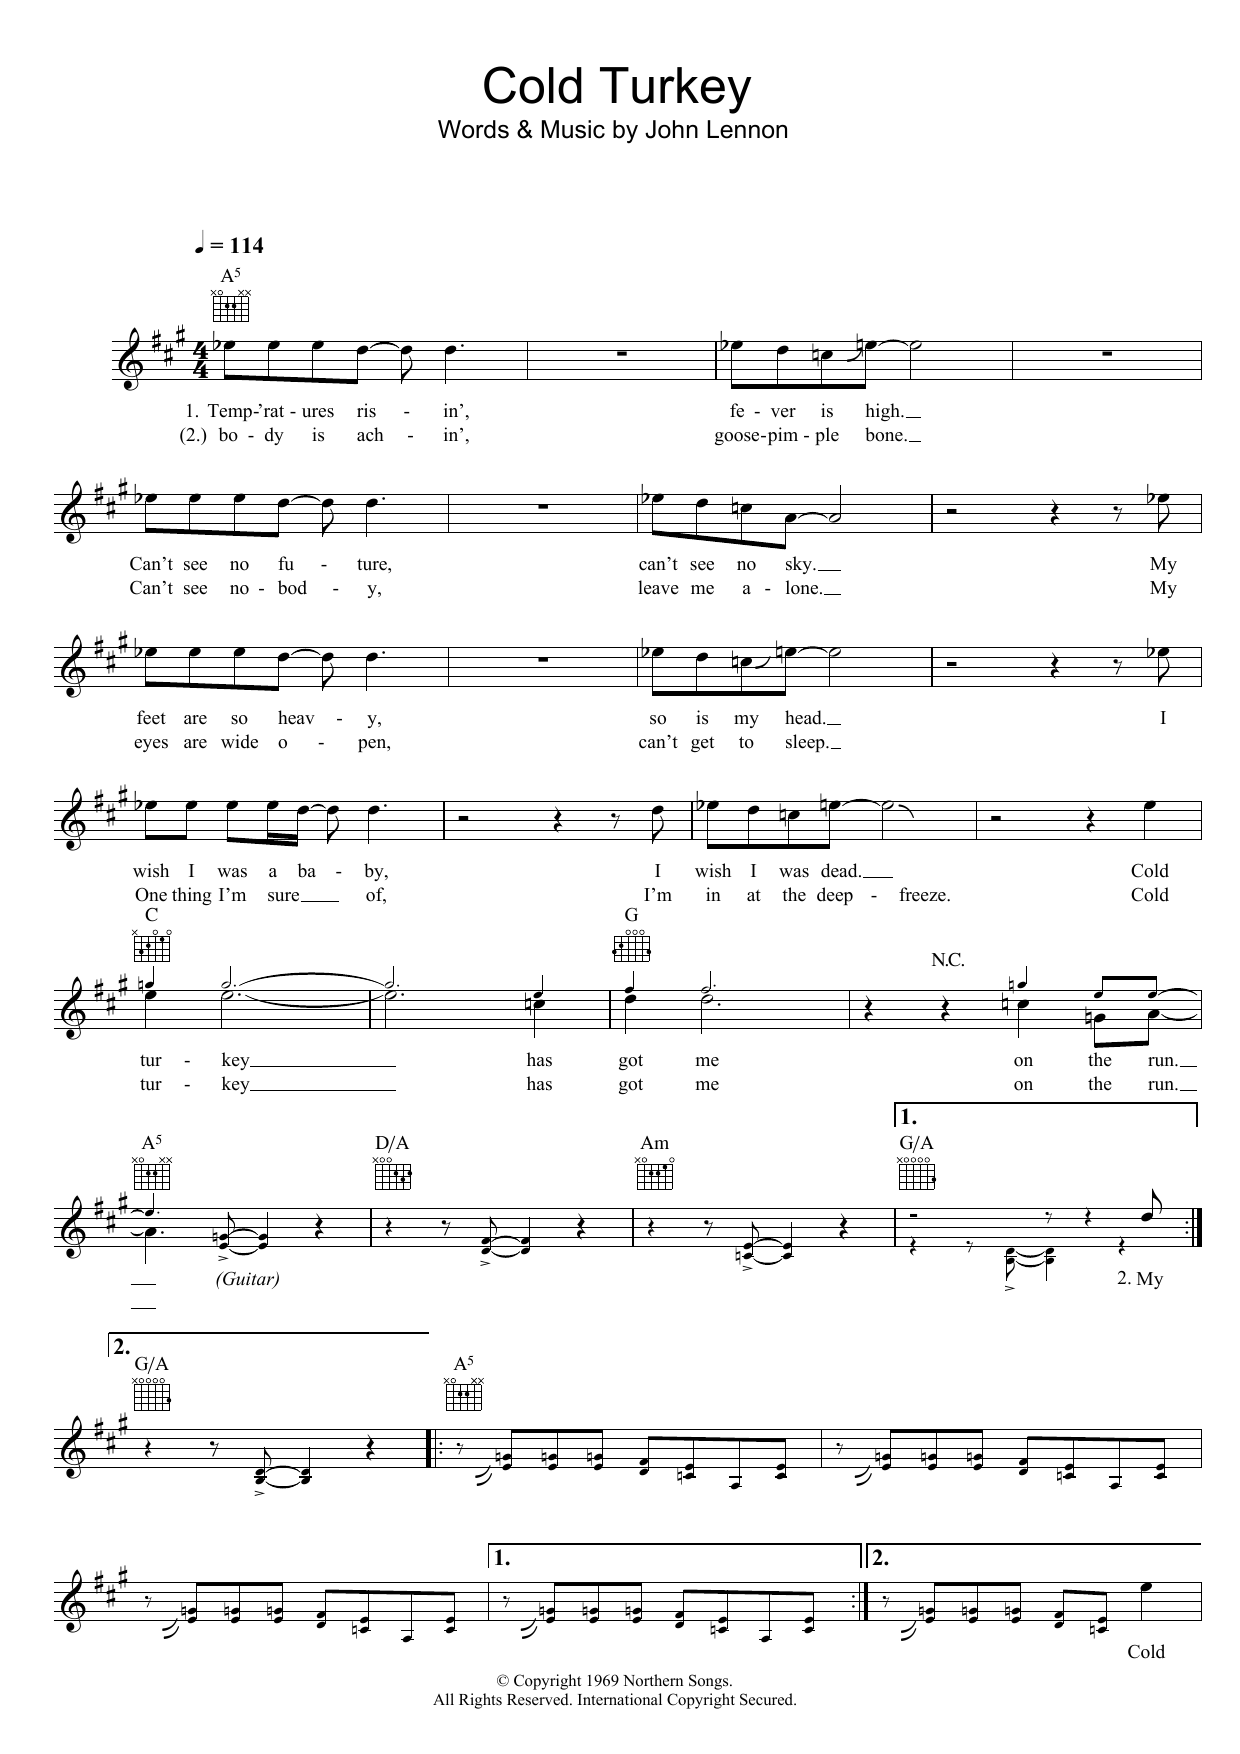 John Lennon Cold Turkey Sheet Music Notes & Chords for Guitar Tab - Download or Print PDF